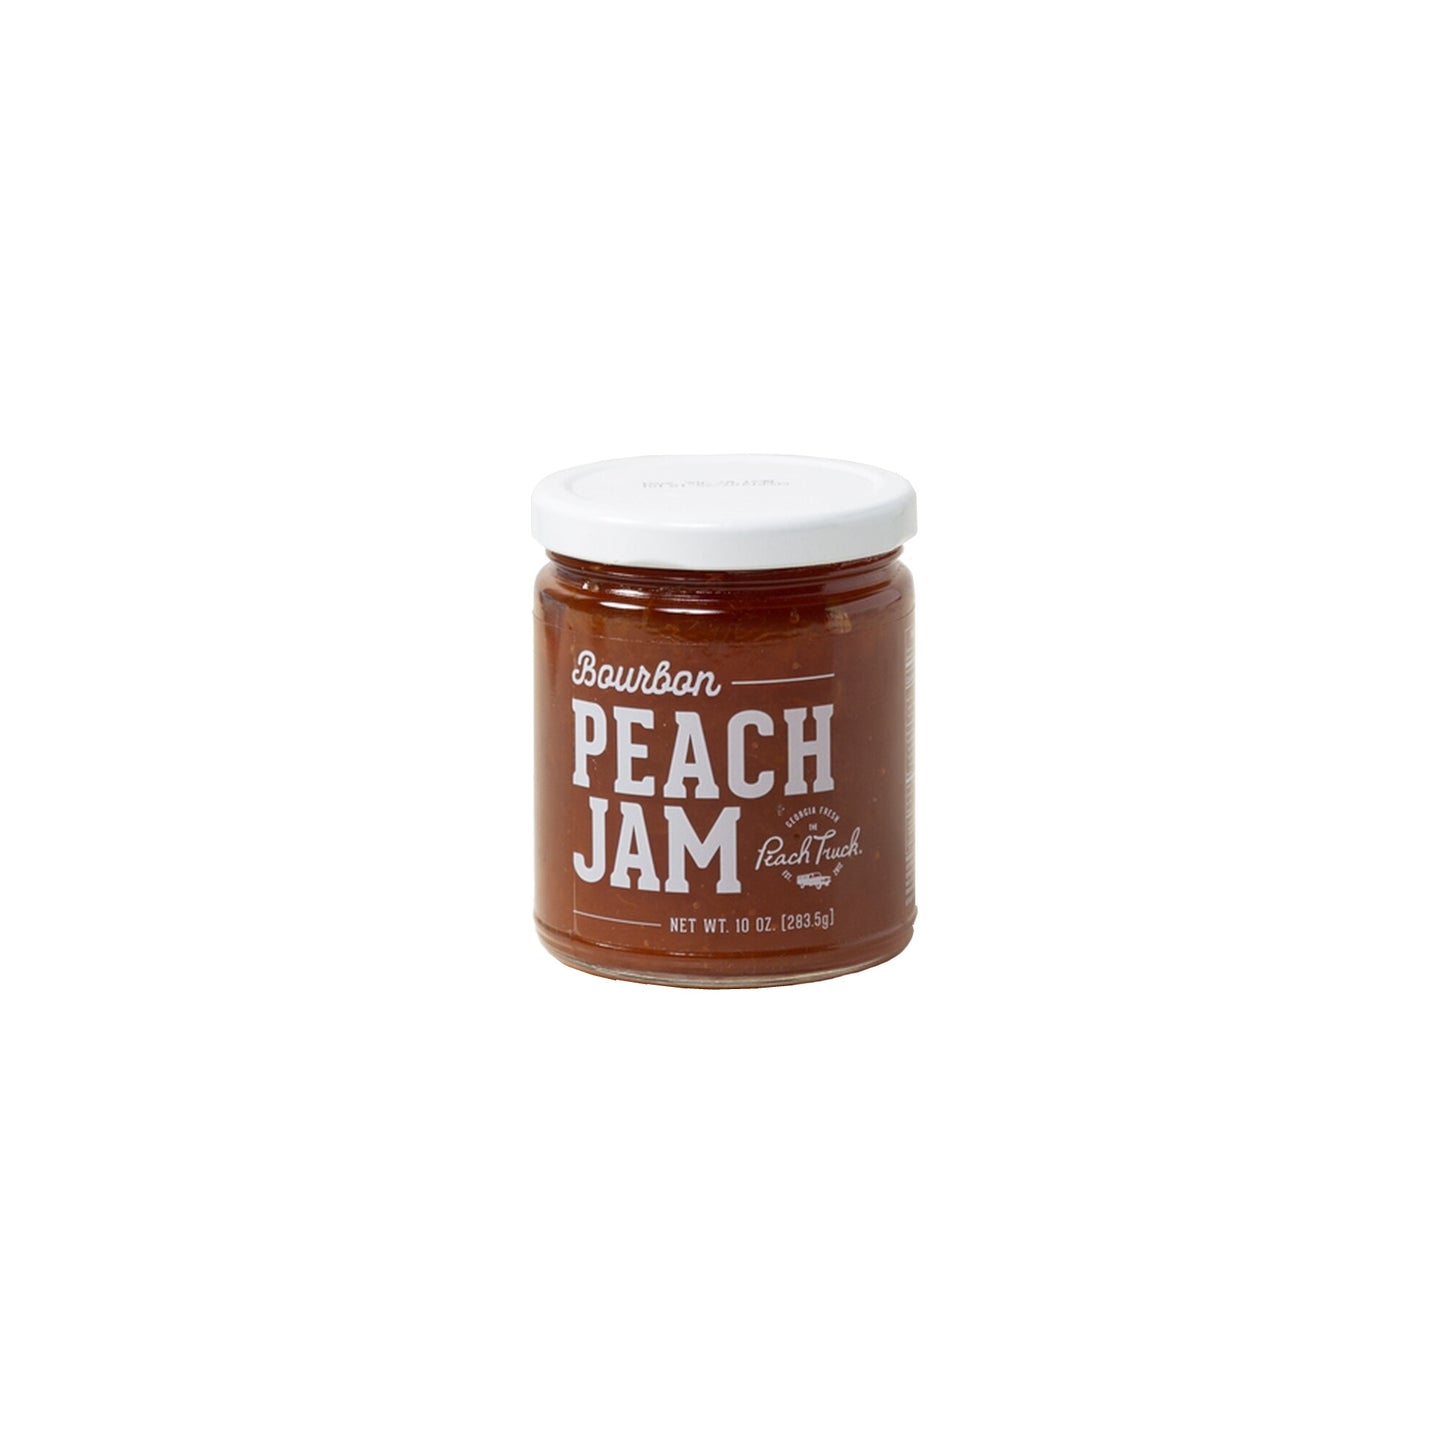 Bourbon Peach Jam